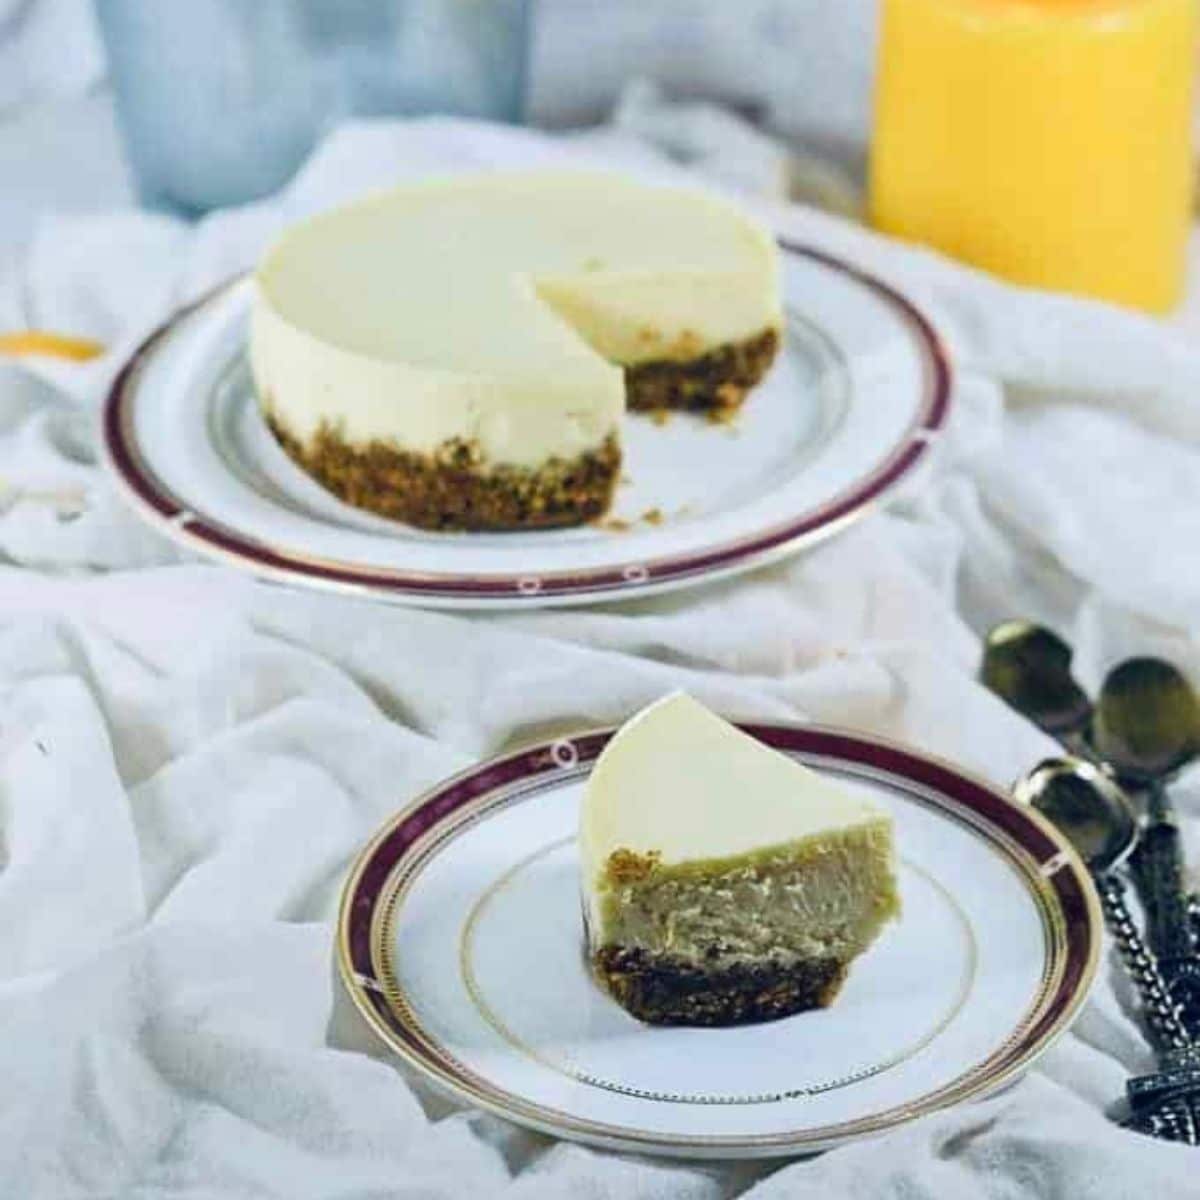 https://www.mydaintysoulcurry.com/wp-content/uploads/2019/11/instant-pot-vanilla-cheesecake-featured.jpg